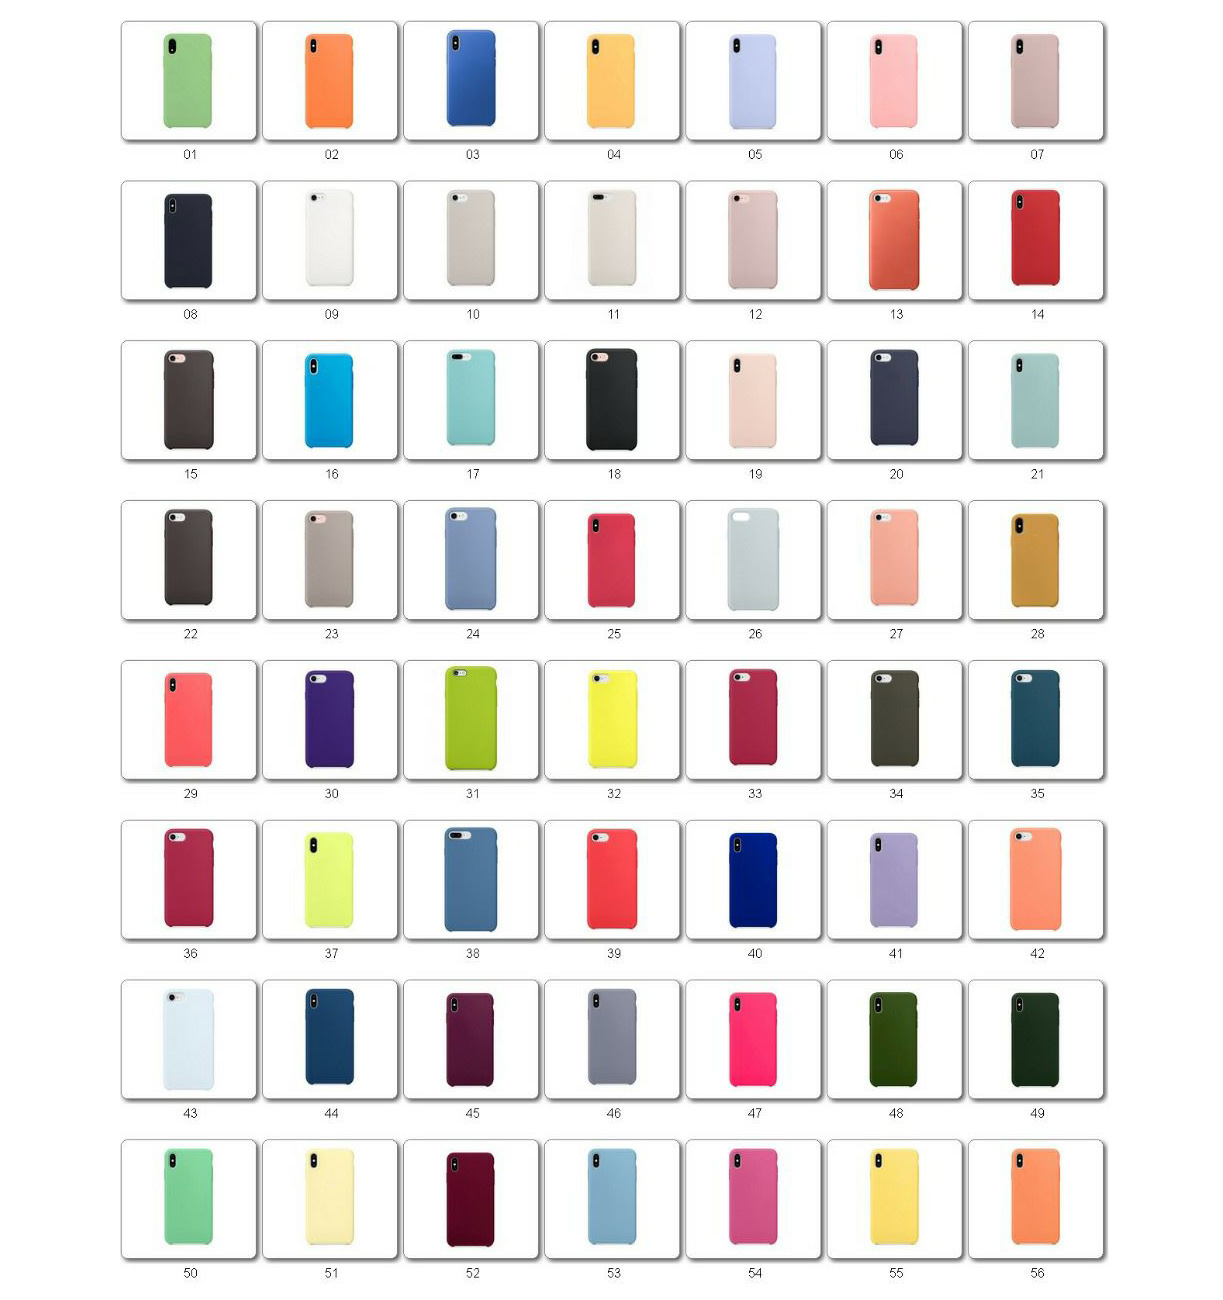 Чехол накладка для APPLE iPhone 5, 5S, SE, силикон, бархат, цвет горчичный.